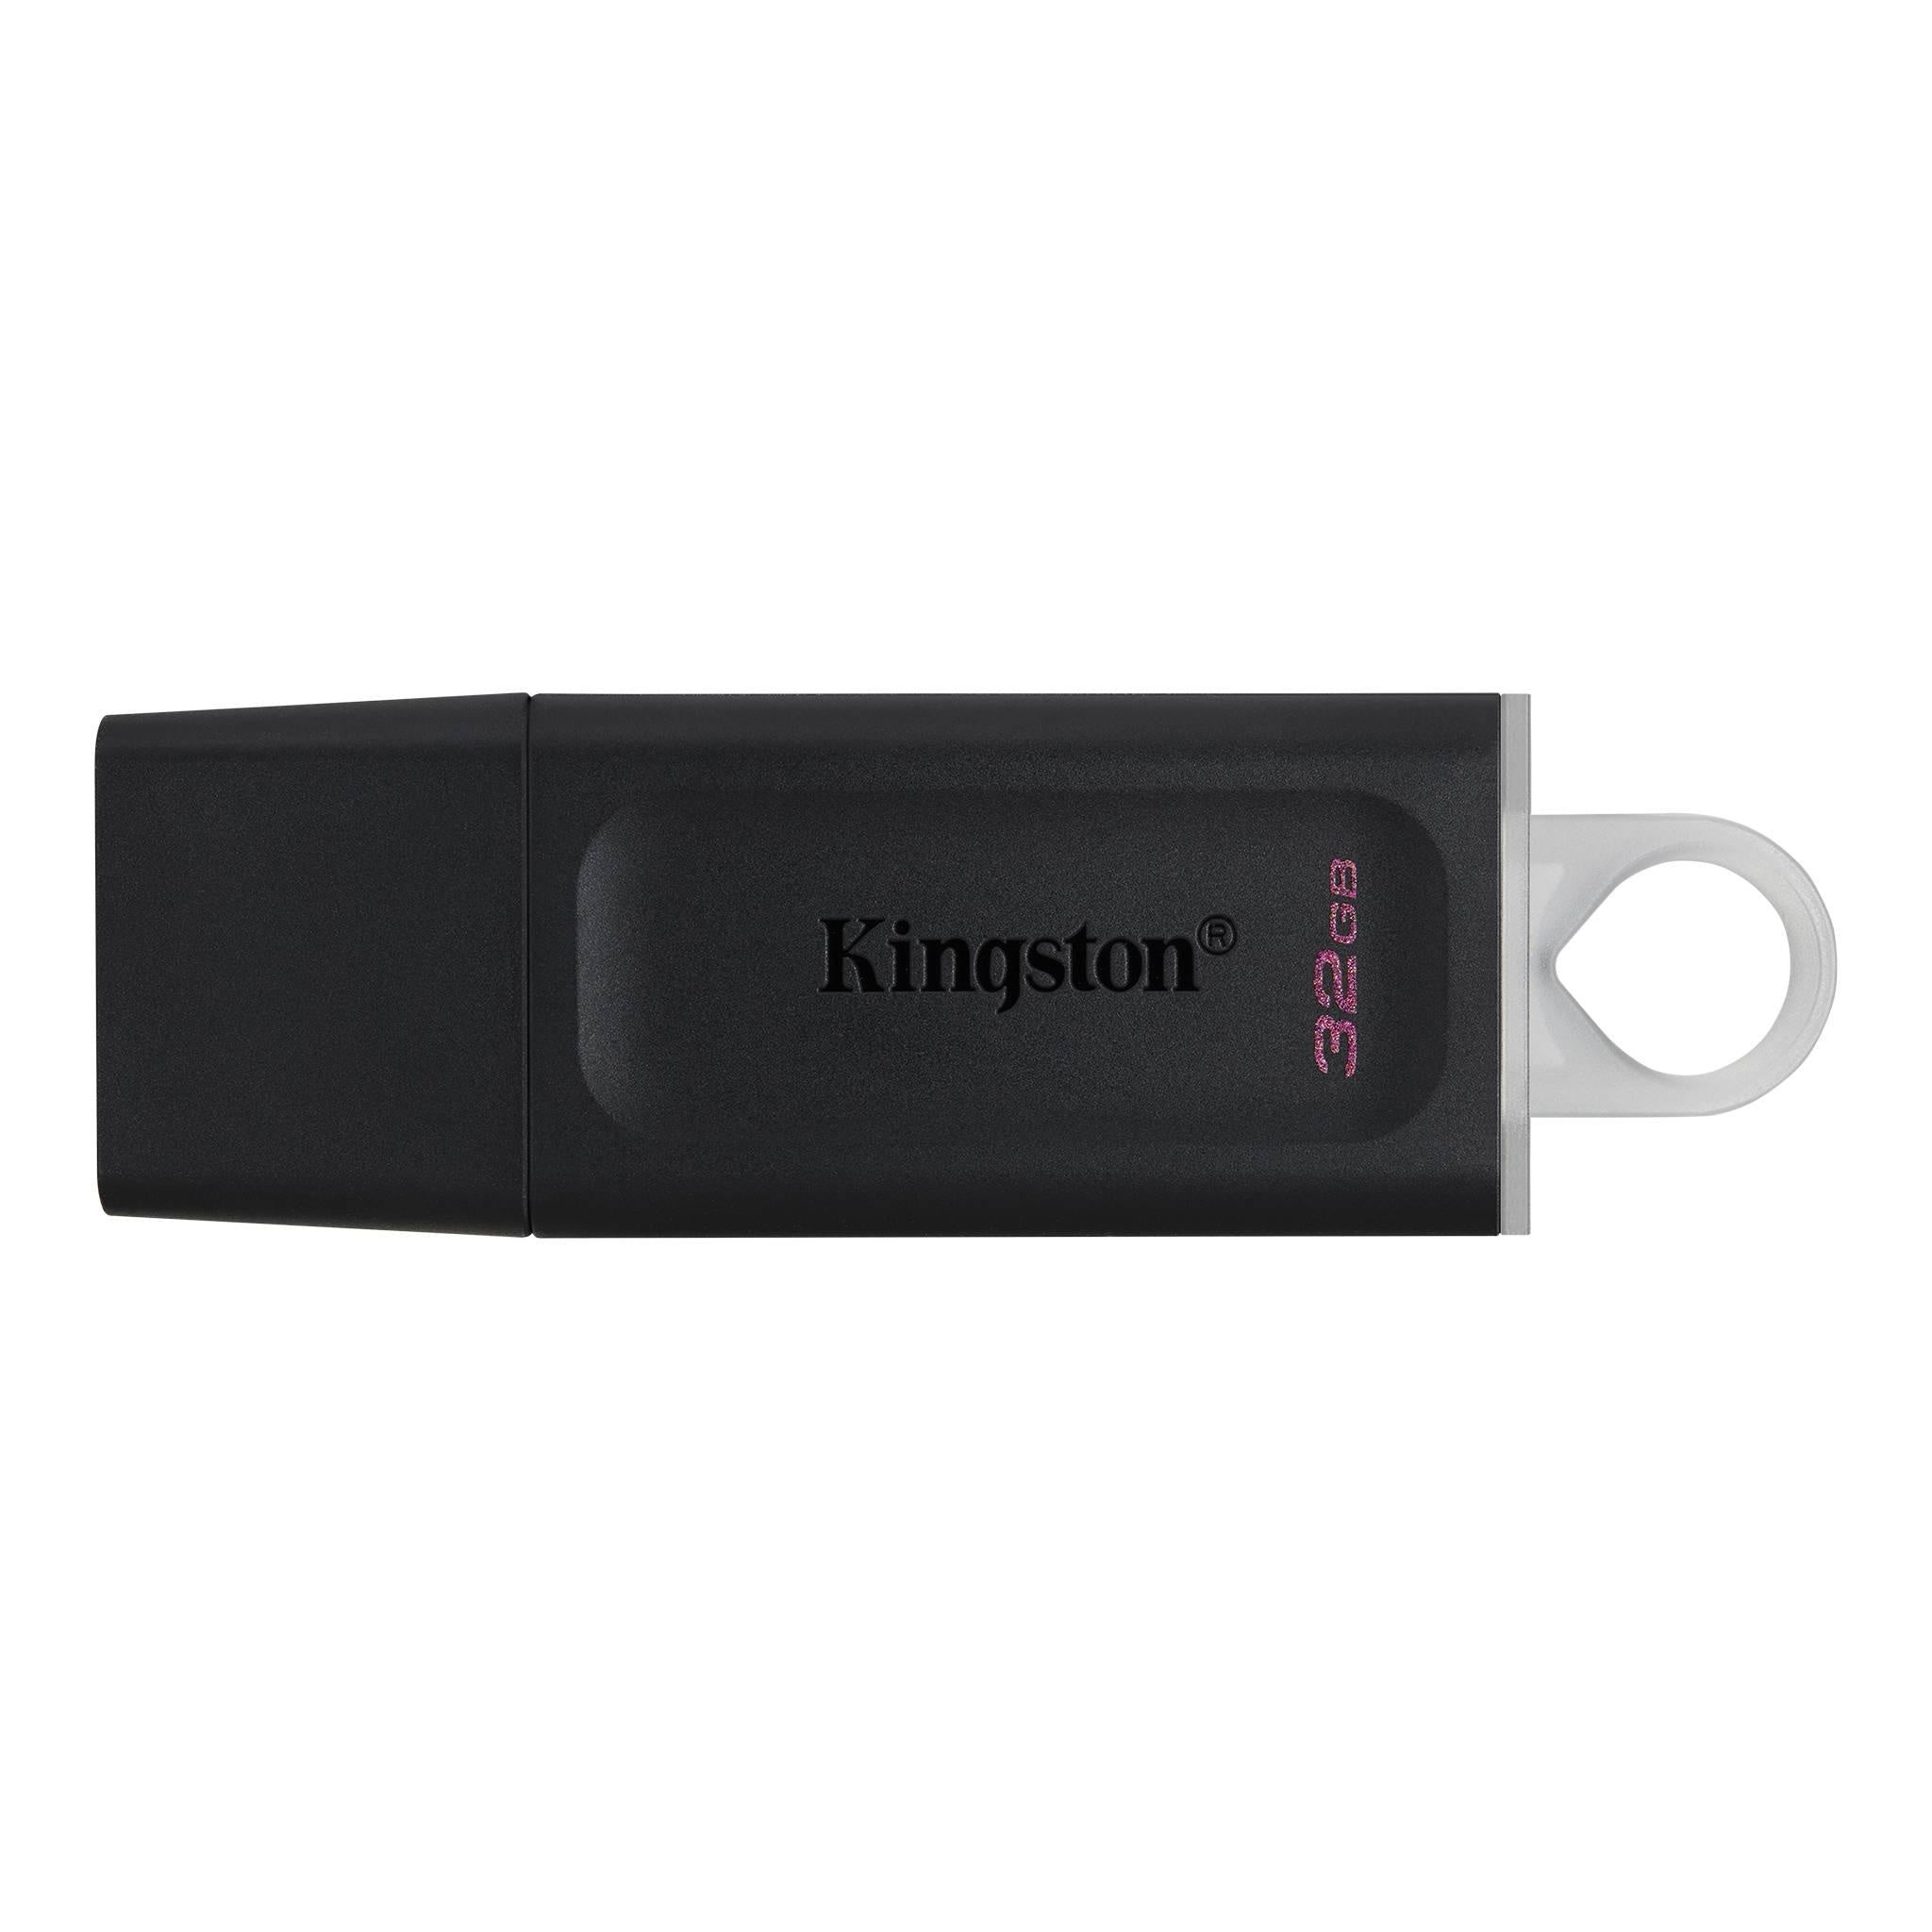 KINGSTON 32GB USB3.0 Flash Drive Memory Stick Thumb Key DataTraveler DT100G3 Retail Pack 5yrs warranty ~USK-DT100G3-32F DT100G3/32GBFR KINGSTON